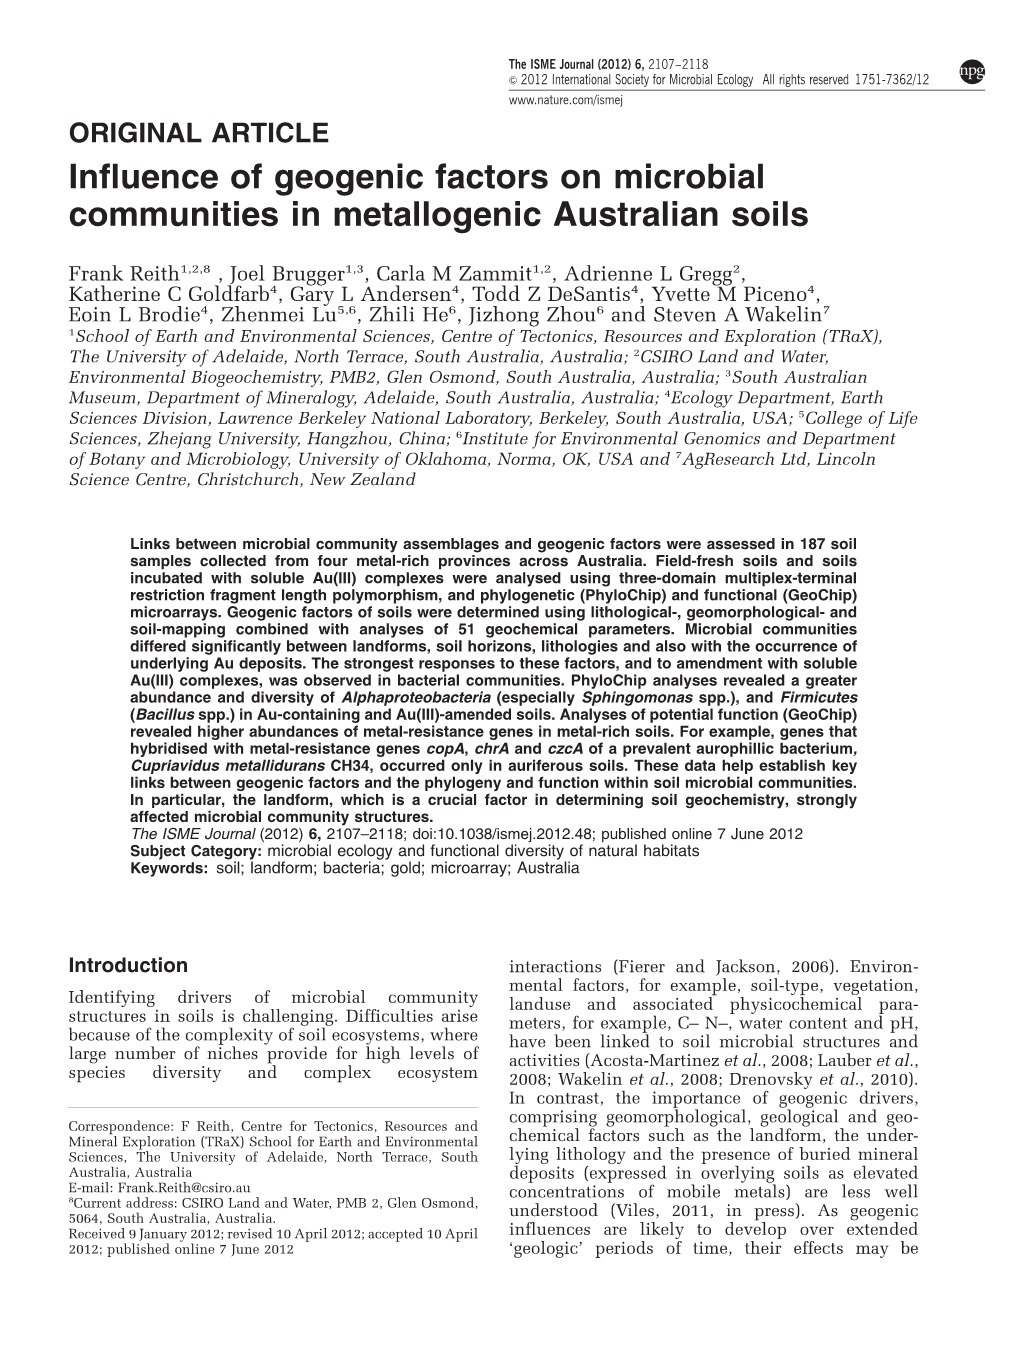 Influence of Geogenic Factors on Microbial Communities in Metallogenic Australian Soils